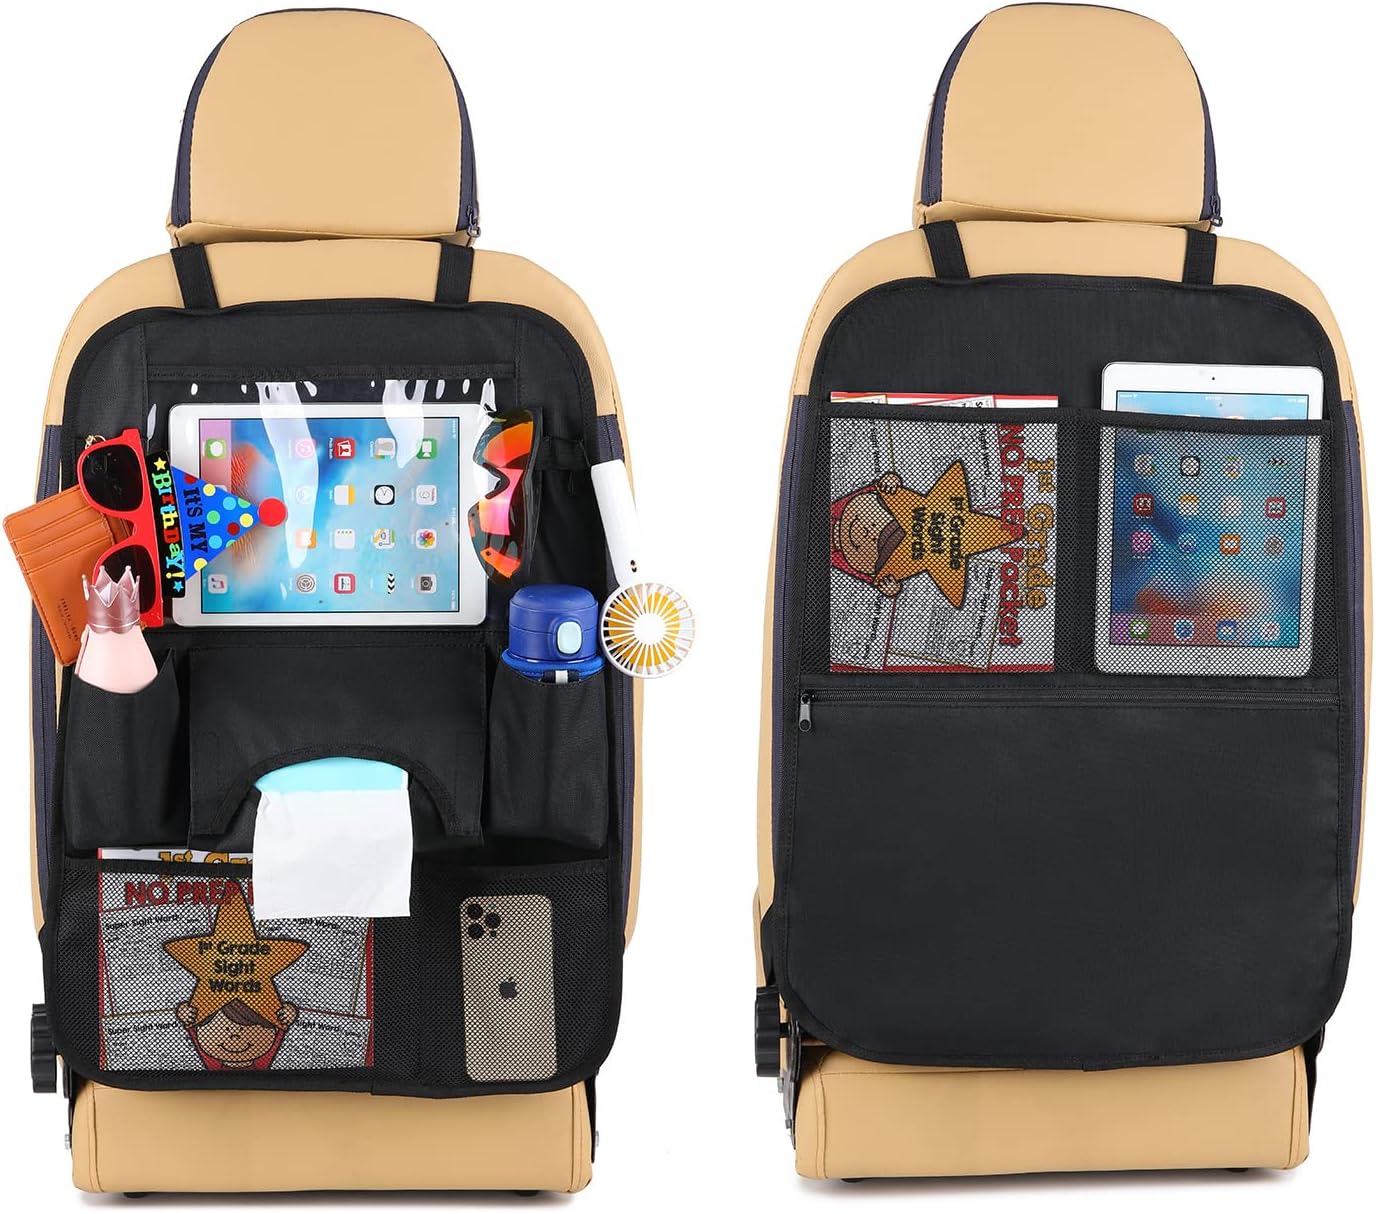 Clear iPad Holder 2 Pack Car Backseat Organizer Universal Multi-Functional Kick Mats Baby Kids Toy Auto backseat Protector Car Back Seat Organizer Holder With Tissue Box Waterproof Storage Bags